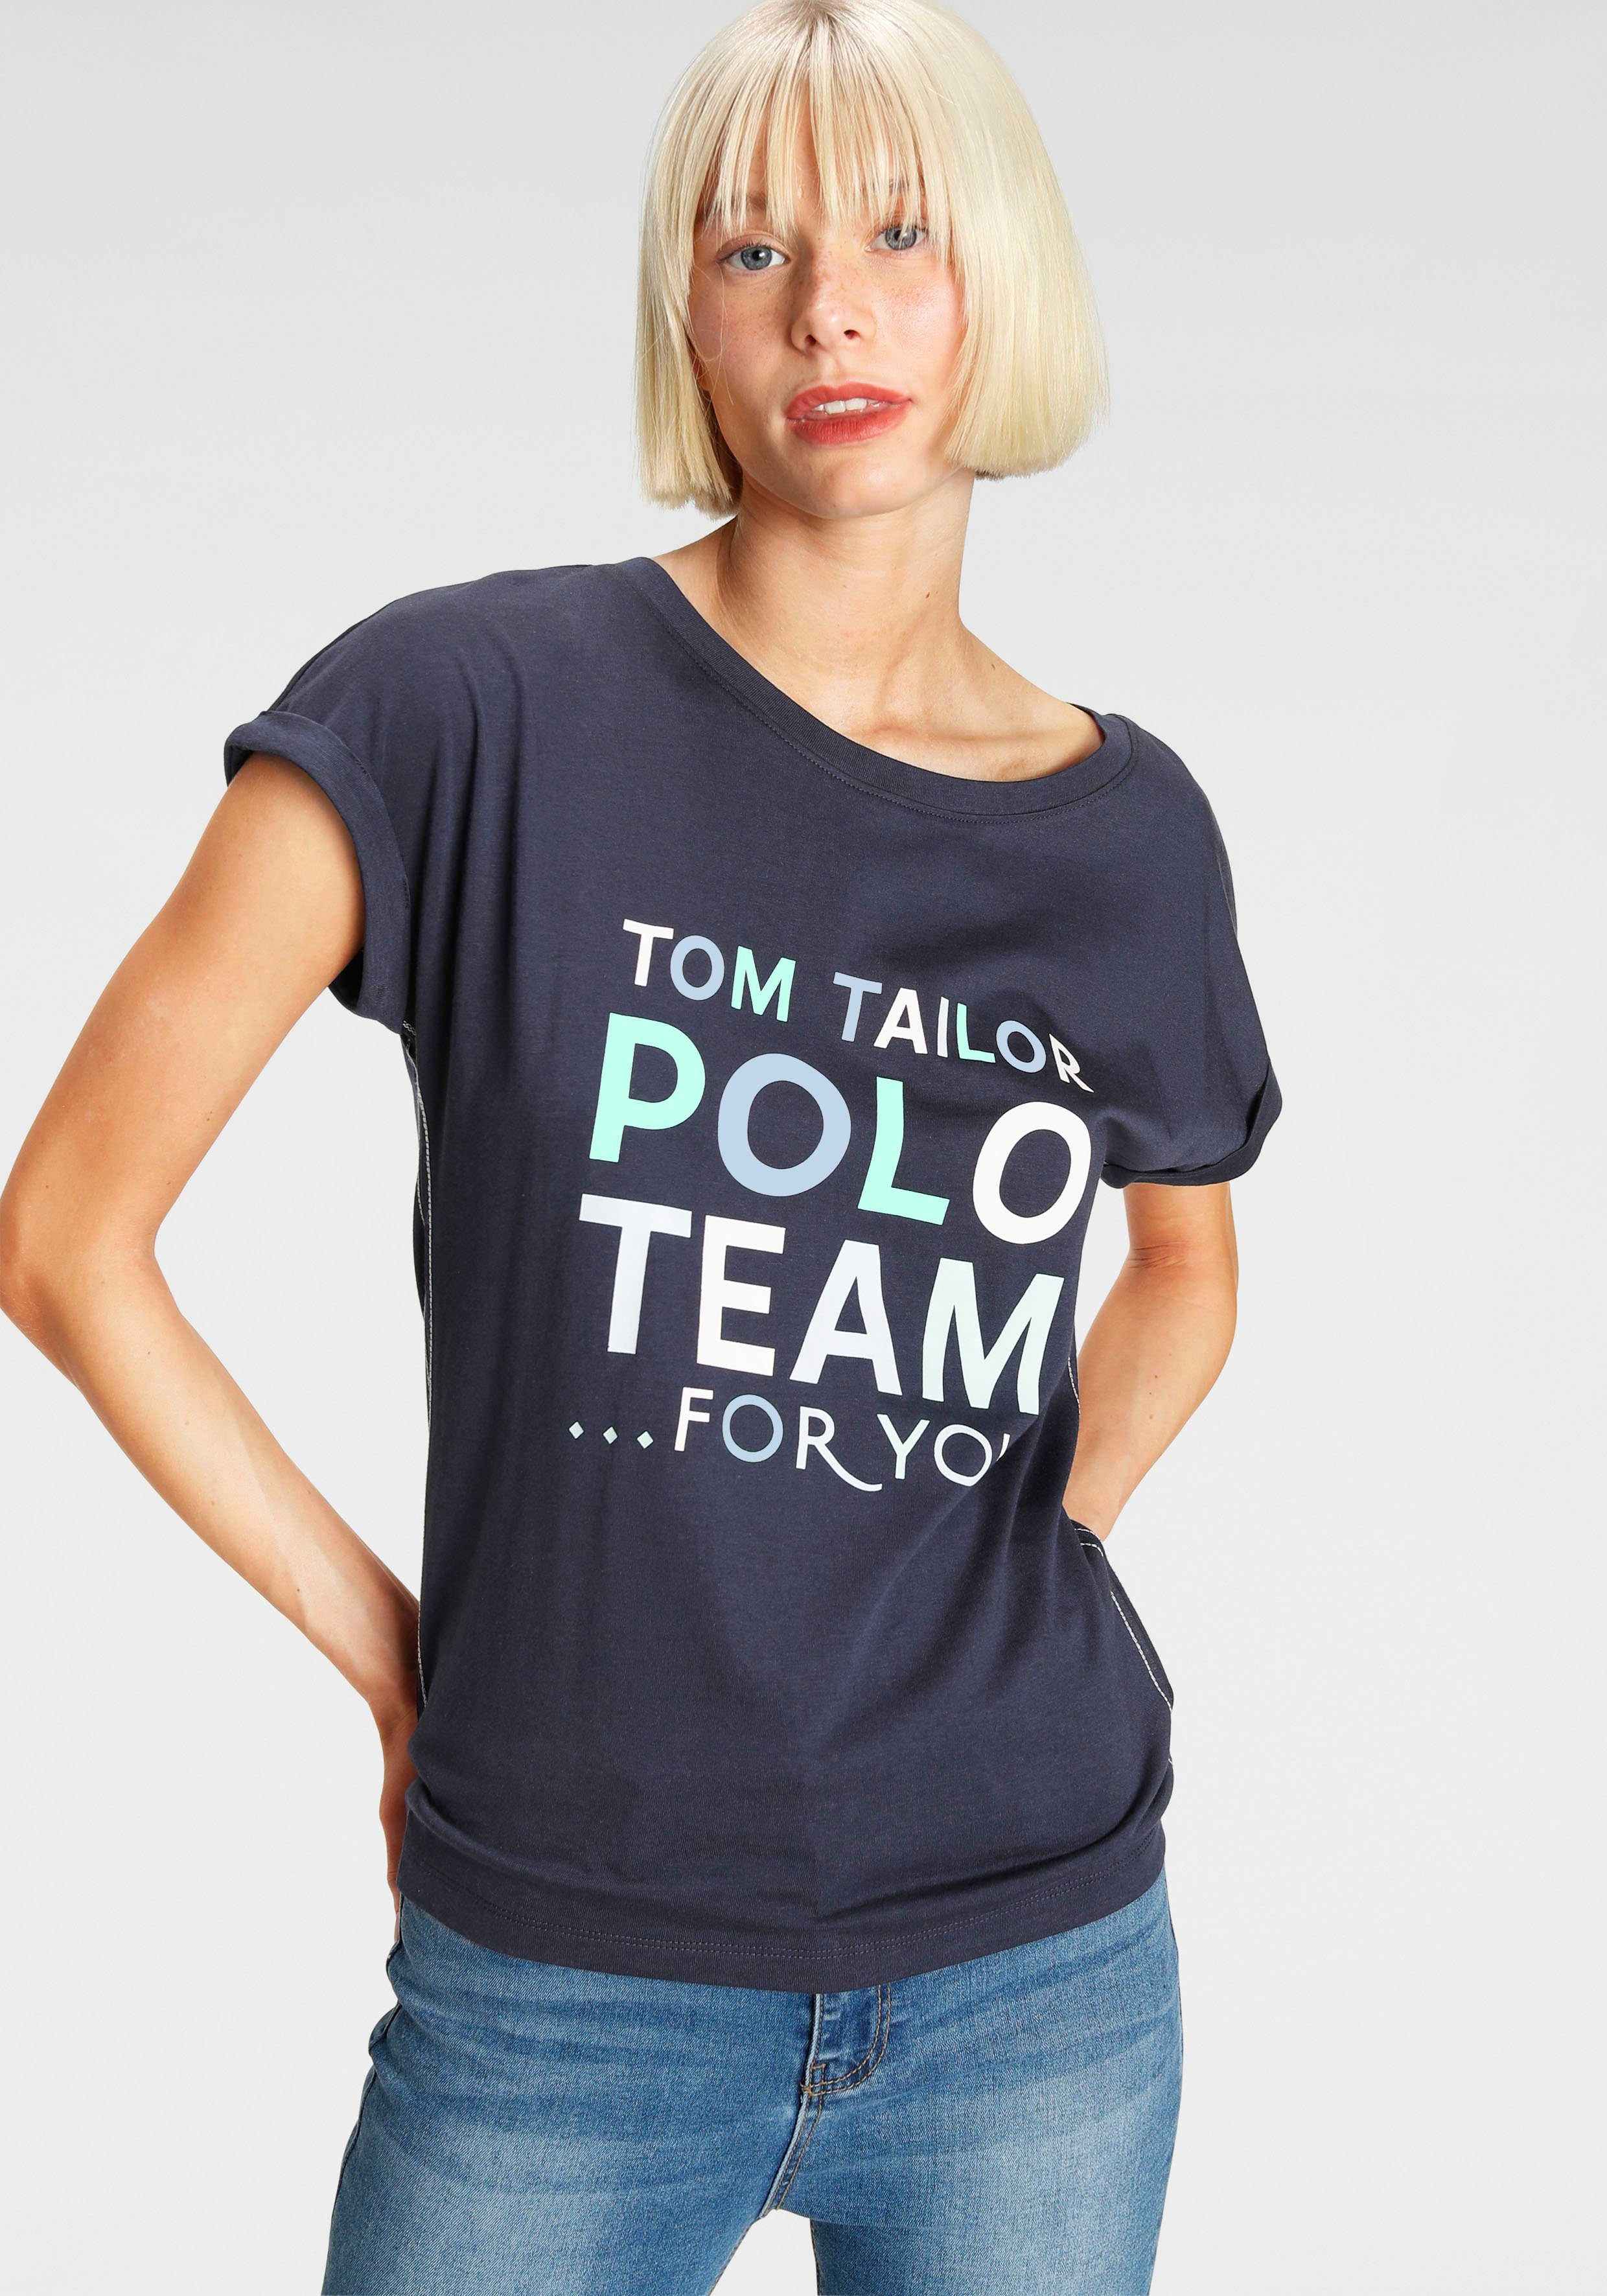 TOM TAILOR Polo Team Print-Shirt großem farbenfrohen Logo-Print | Print-Shirts